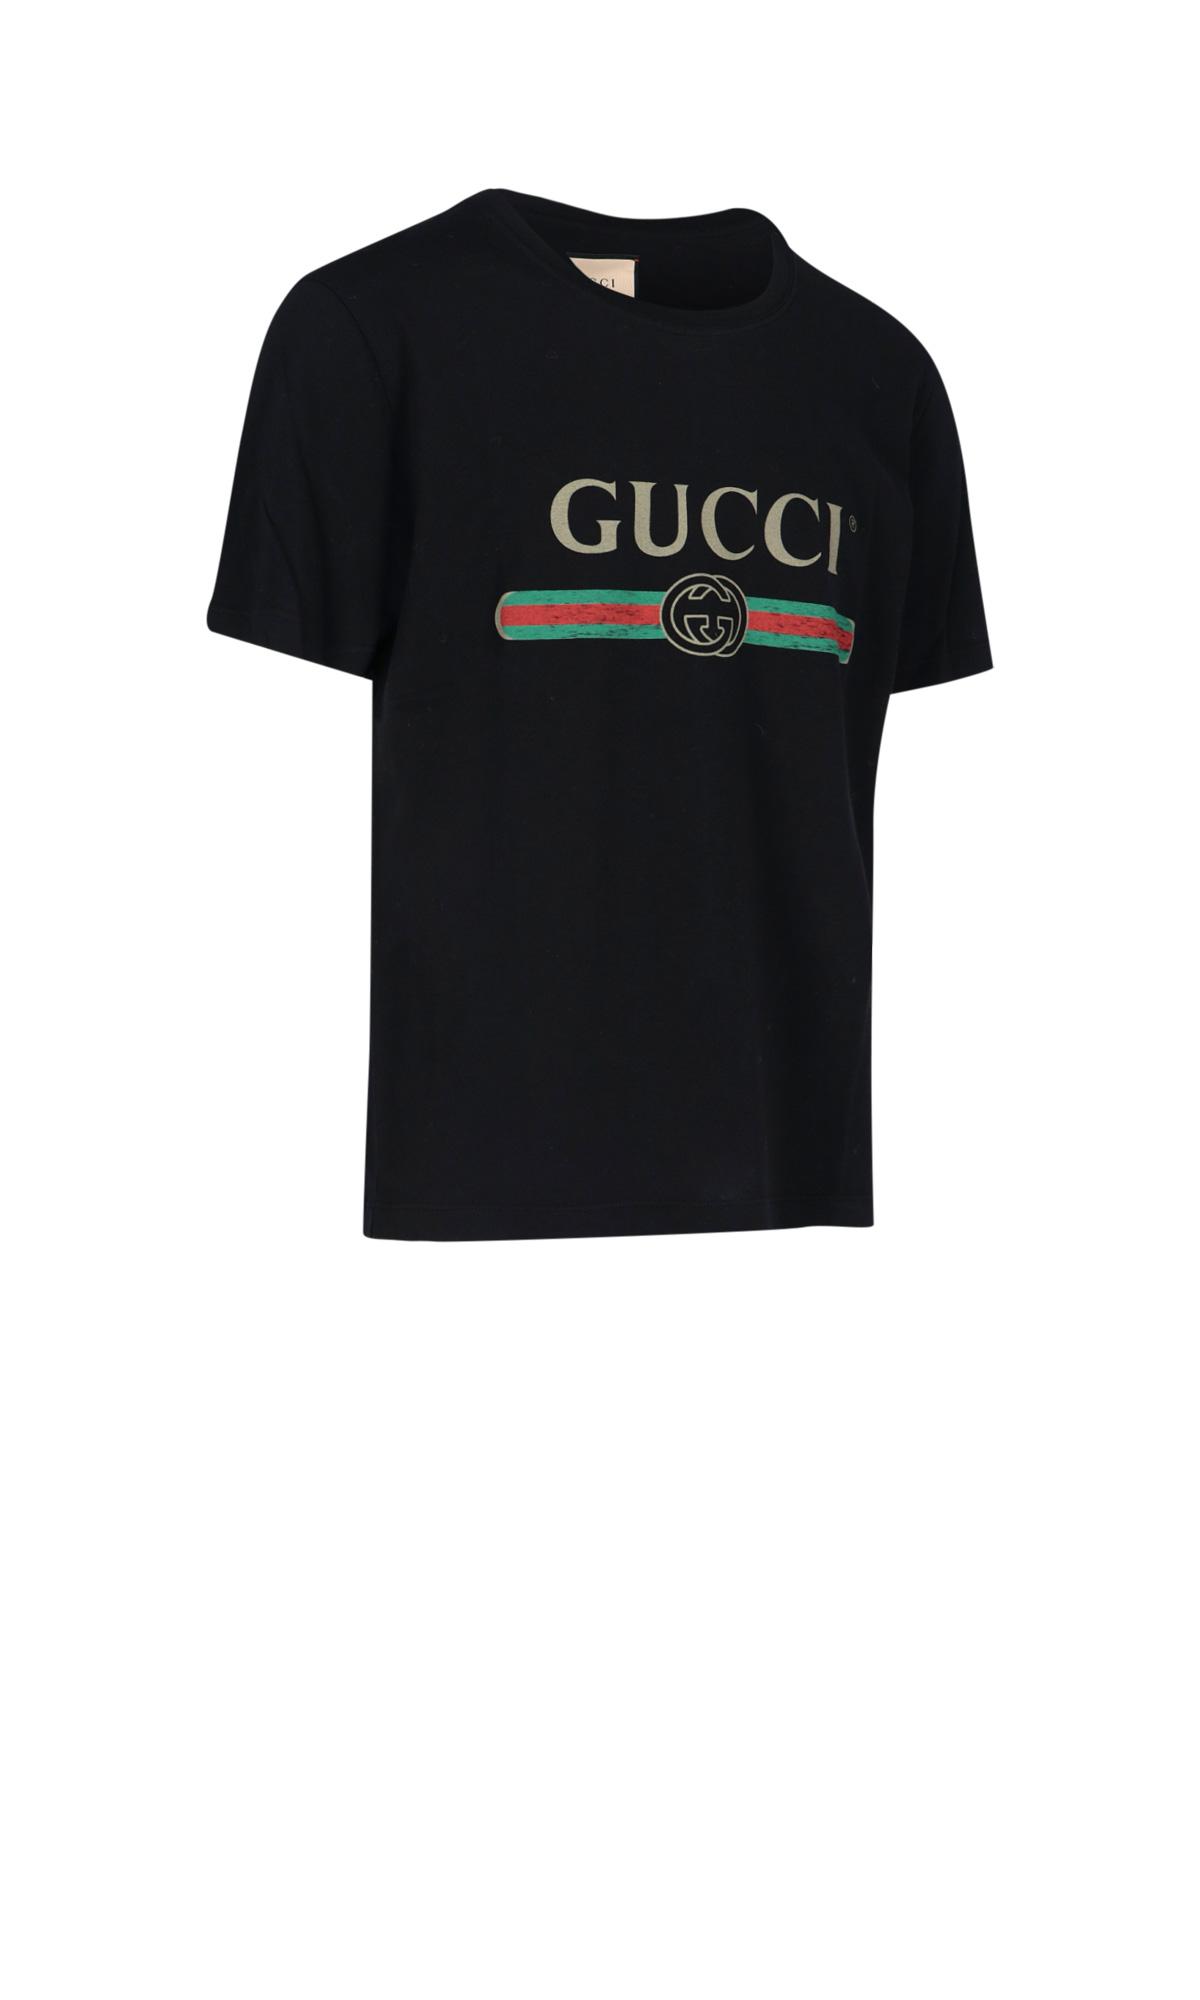 Gucci Vintage Logo T-shirt in Nero (Black) for Men - Lyst